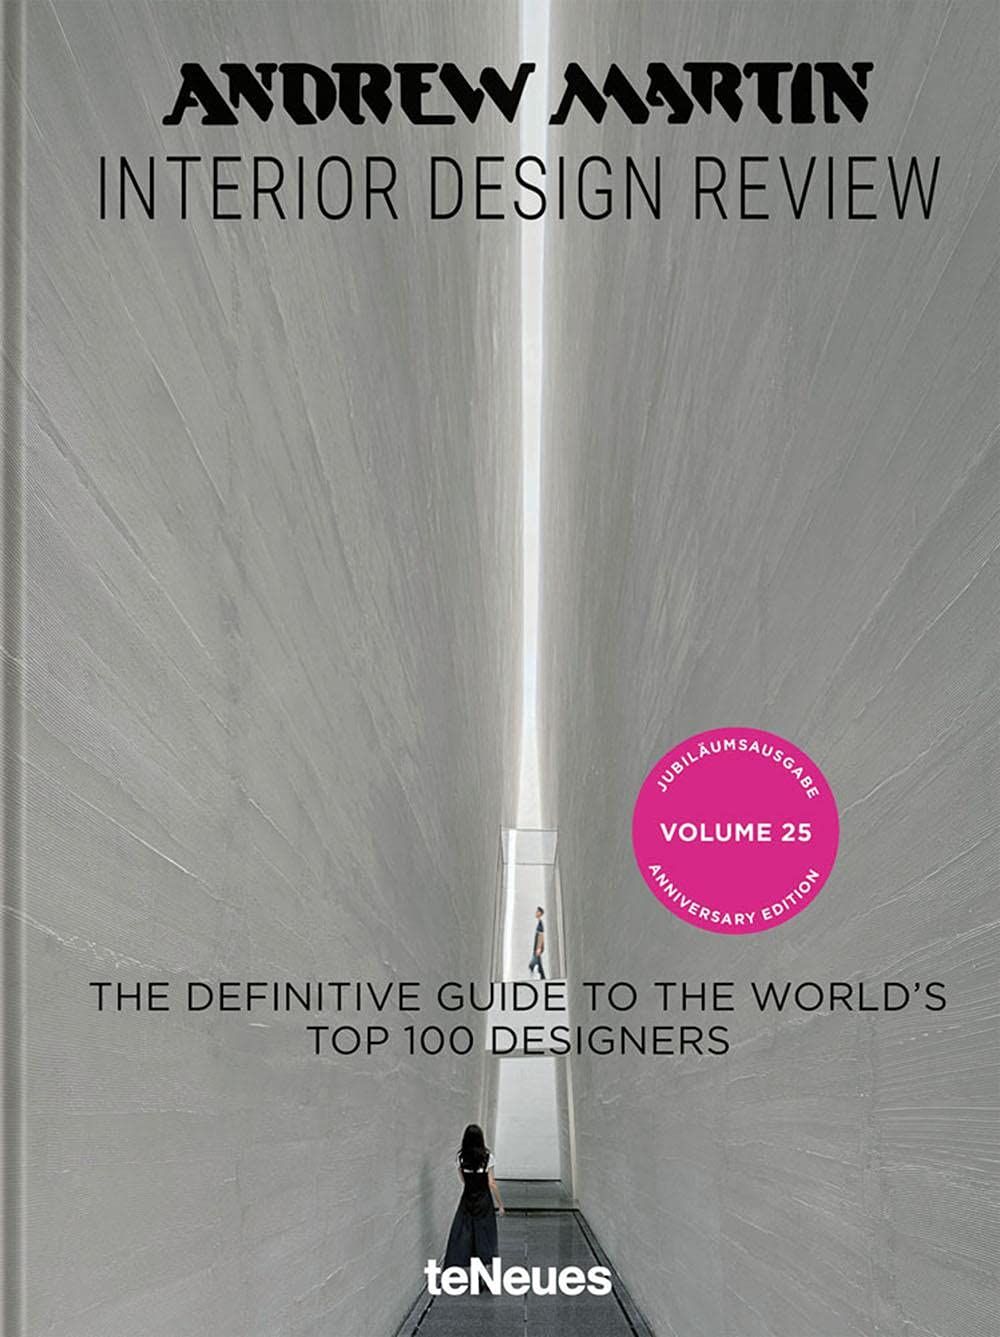  Andrew Martin Interior Design Review_Martin Waller_9783961713691_teNeues Publishing UK Ltd 